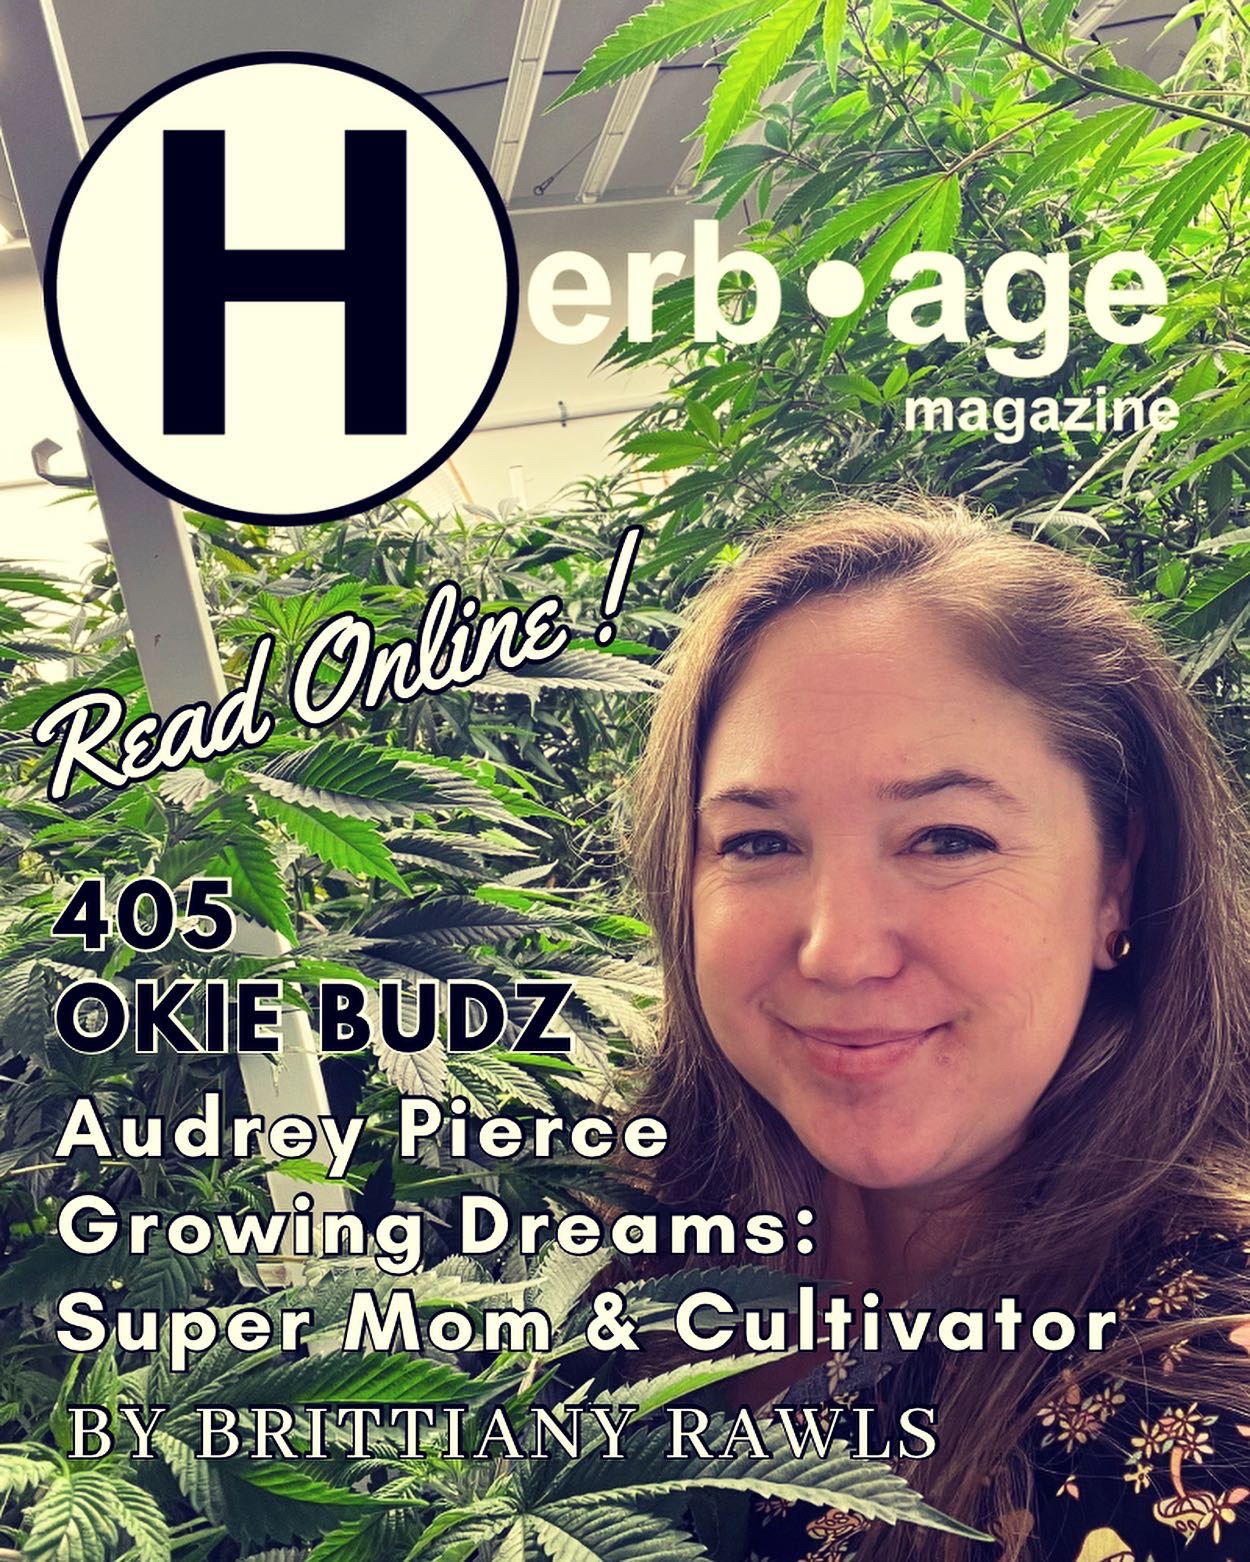 Audrey Pierce – Super Mom & Cultivator